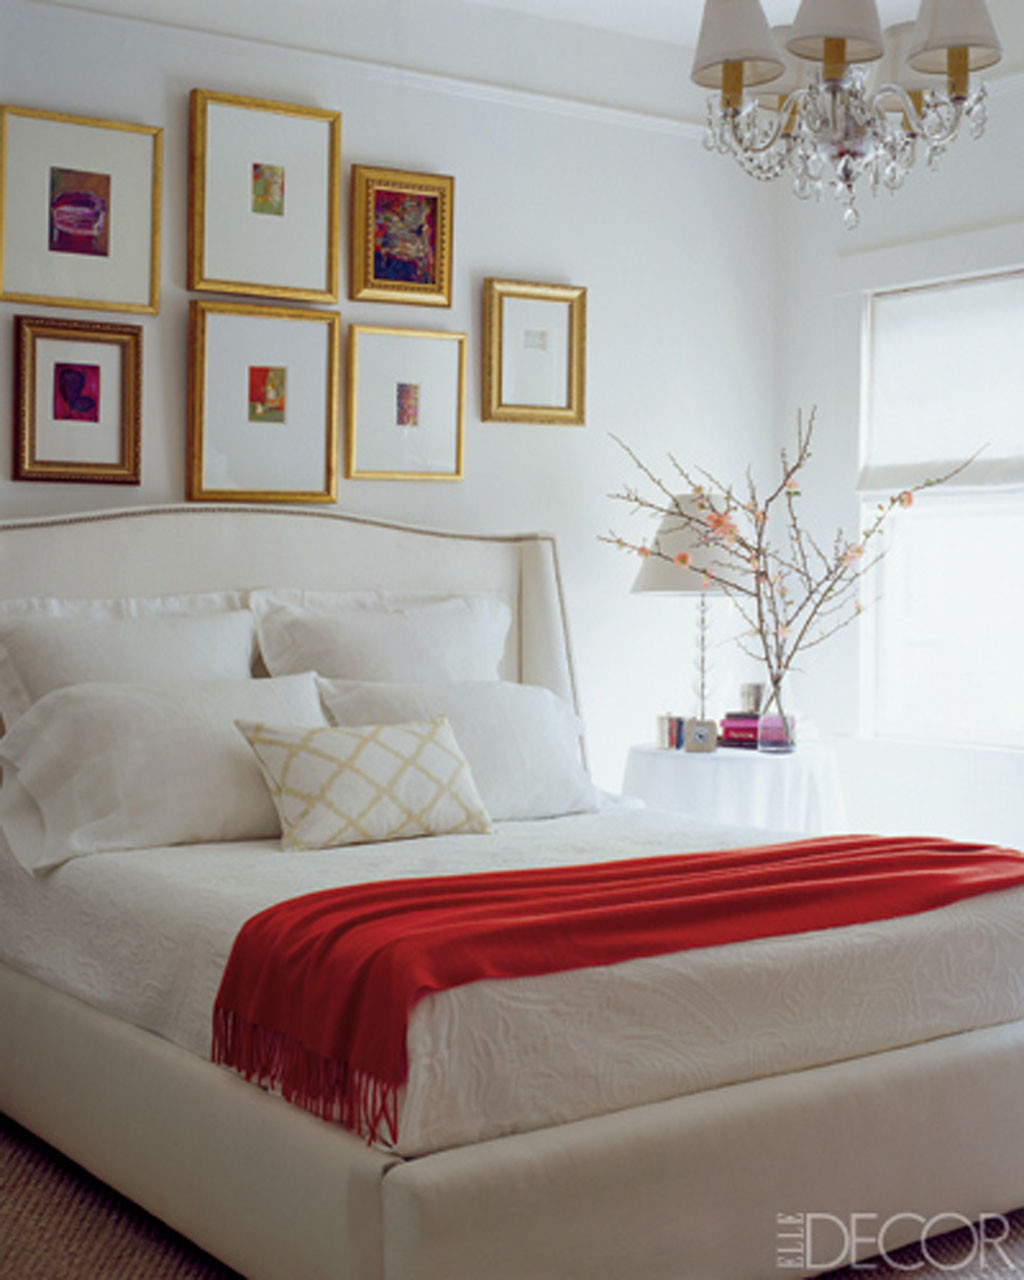 White Bedroom Decorating Ideas
 41 White Bedroom Interior Design Ideas &